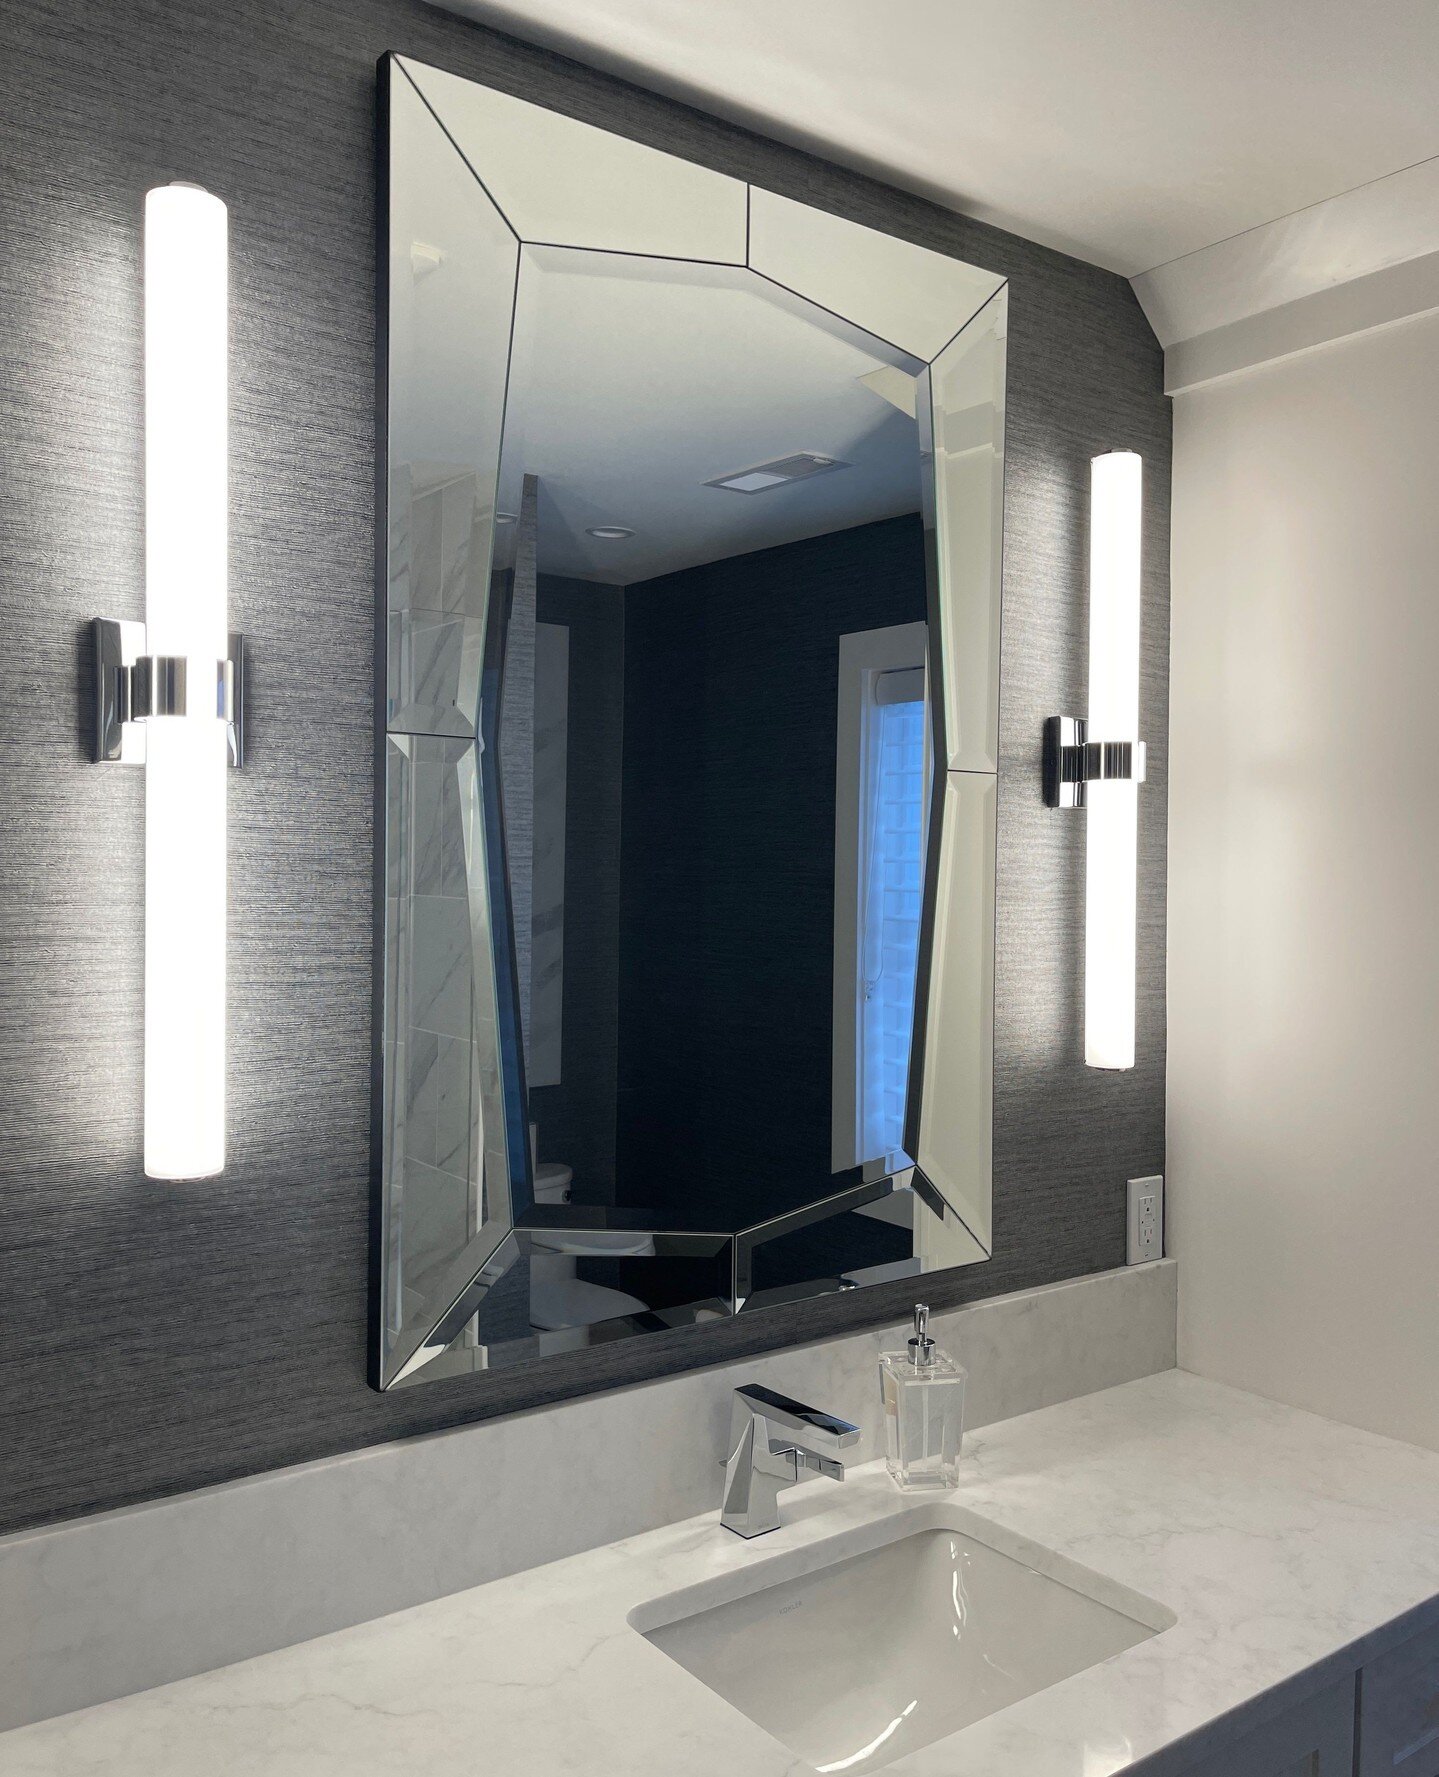 Infuse your daily routine with a touch of sophistication 🩶⁠
.⁠
.⁠
.⁠
.⁠
#mydesign #StylishLiving #MirrorMagic #GlamBathroom #LuxuryLiving #BathroomDesign #ChicSpaces #GlamDecor #InteriorInspo #BathroomGoals #StylishHome #PrimaryBathroom #interiorsty